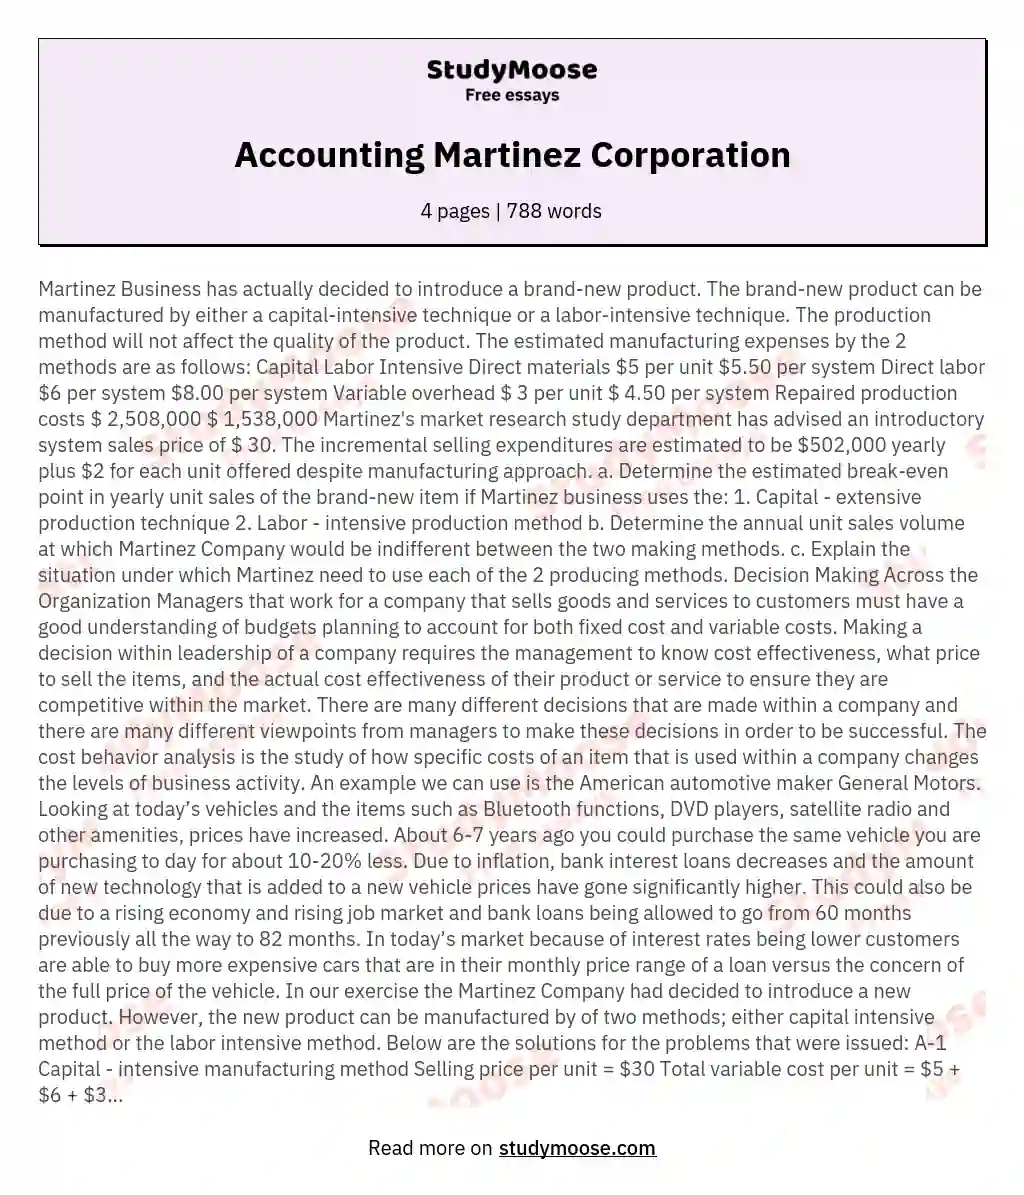 Accounting Martinez Corporation essay